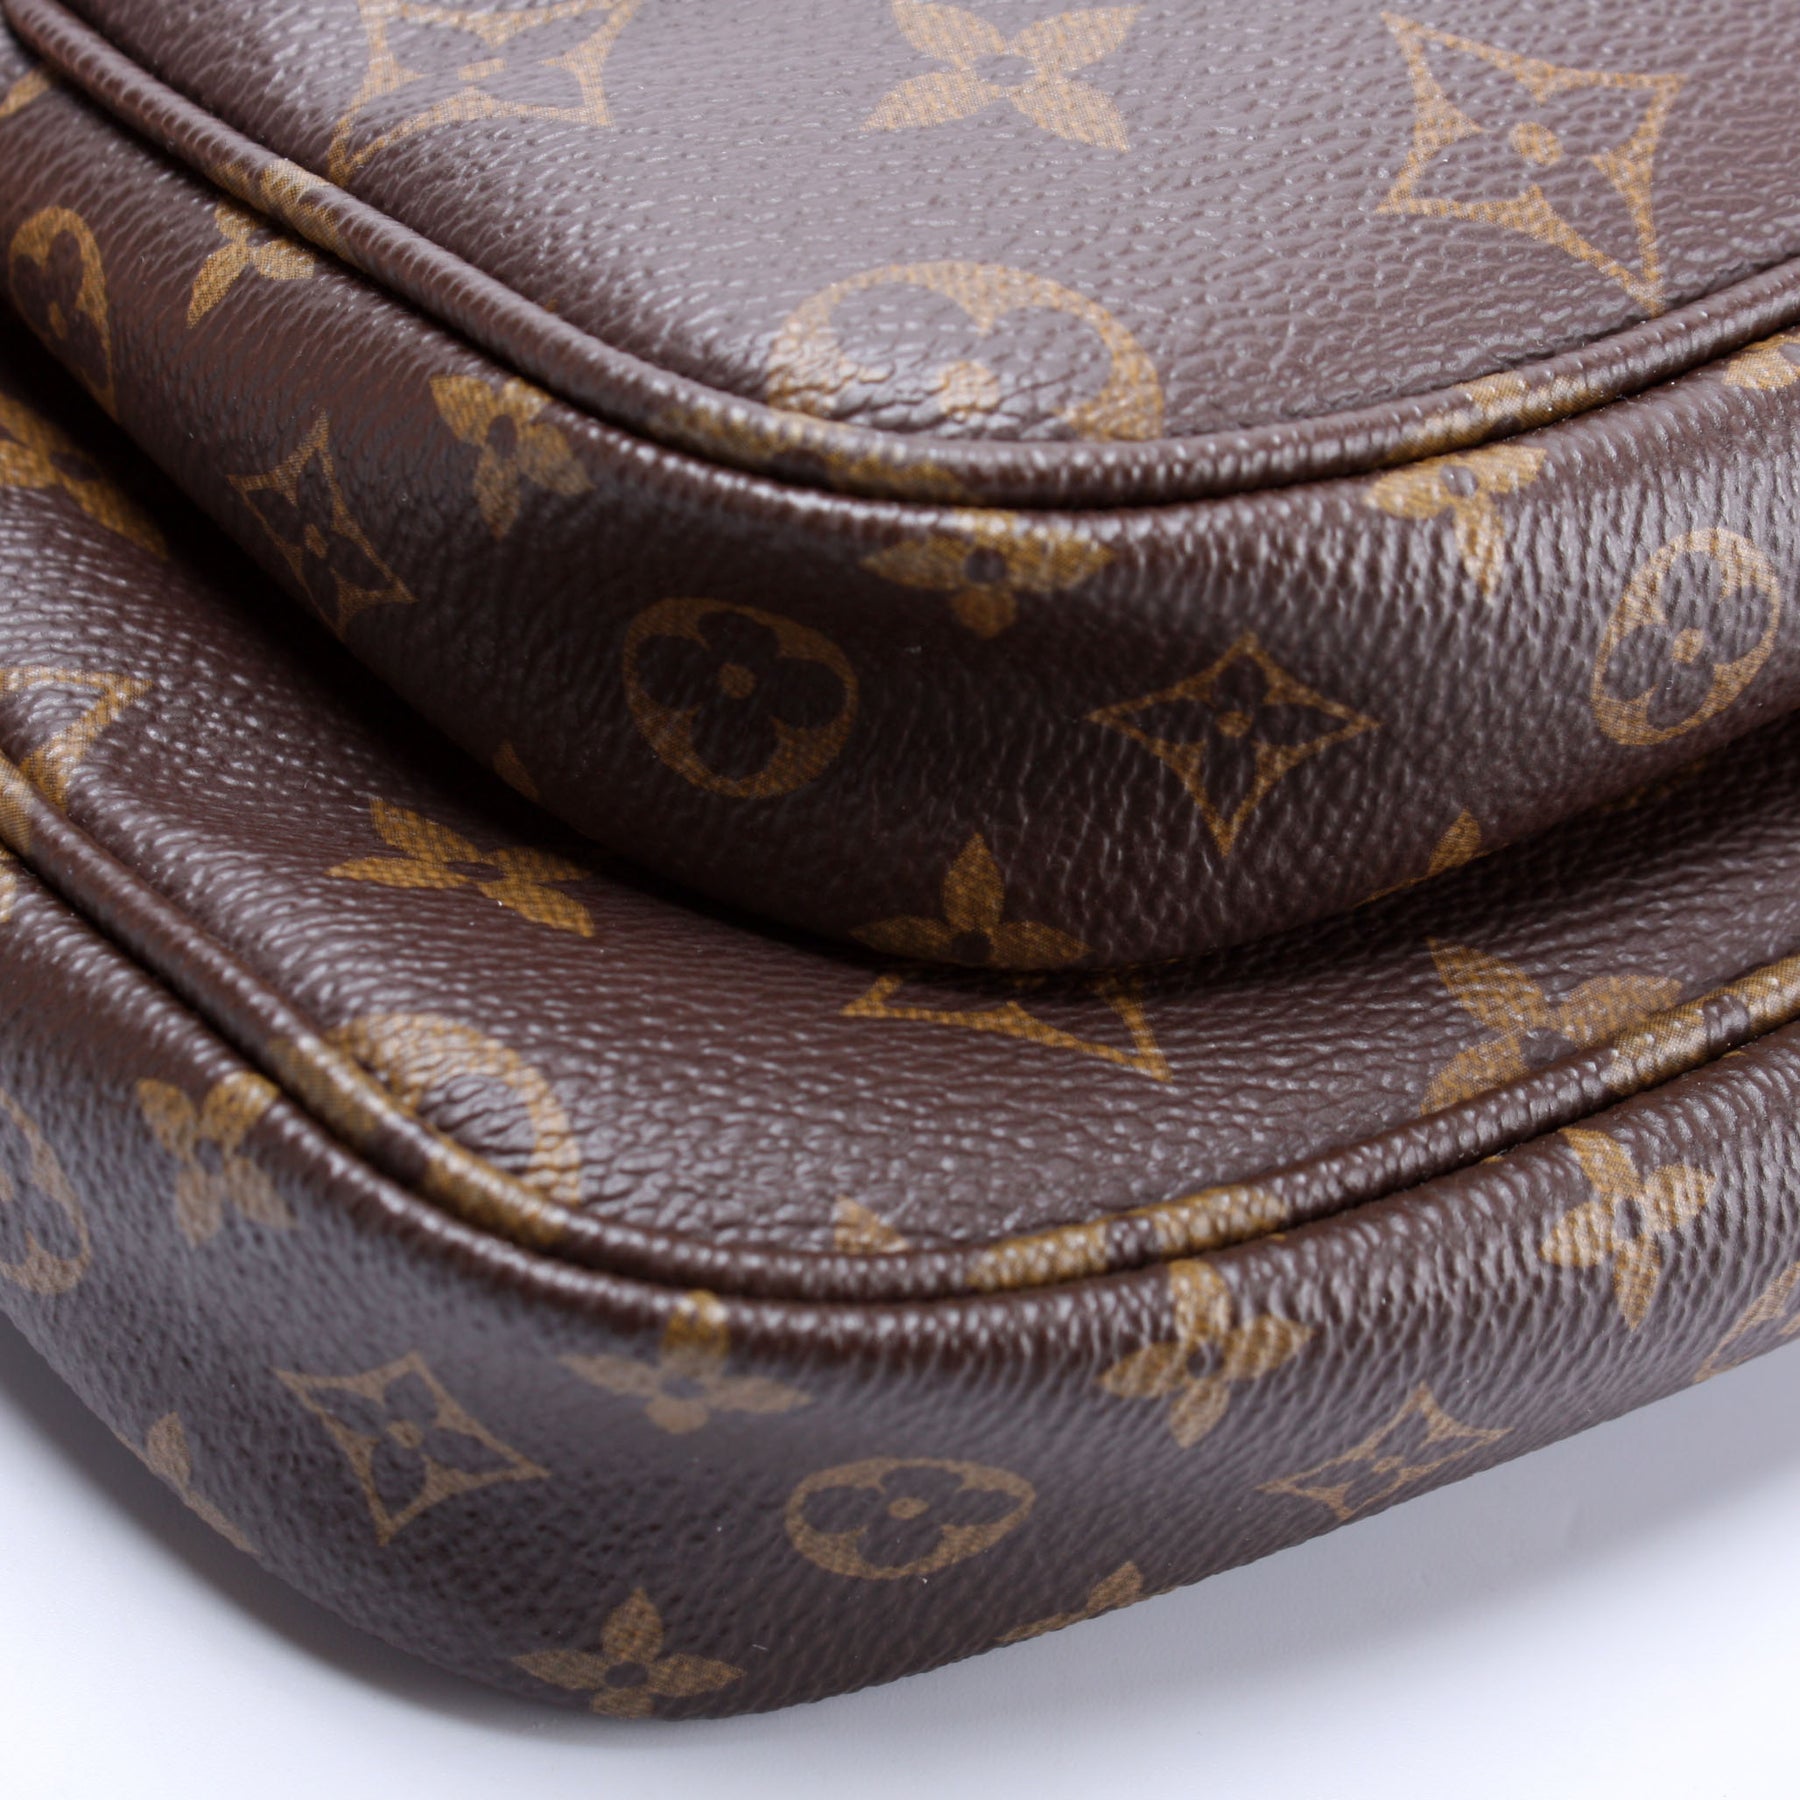 Multi Pochette Monogram – Keeks Designer Handbags